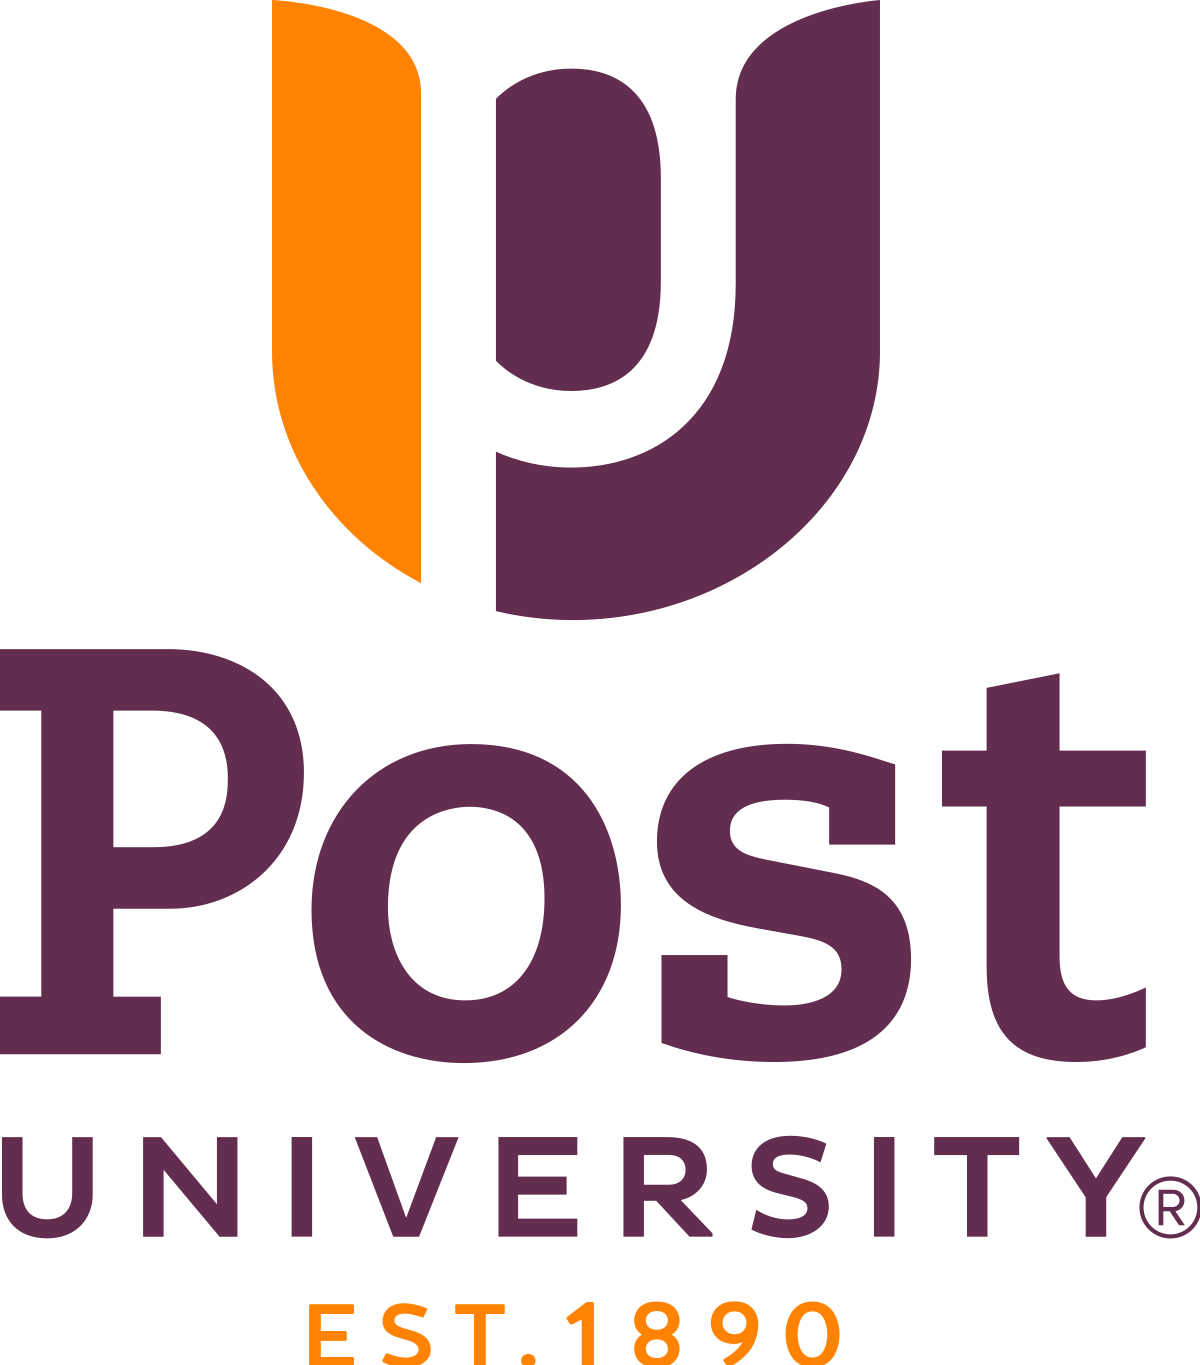 Post_University_logo.svg.png